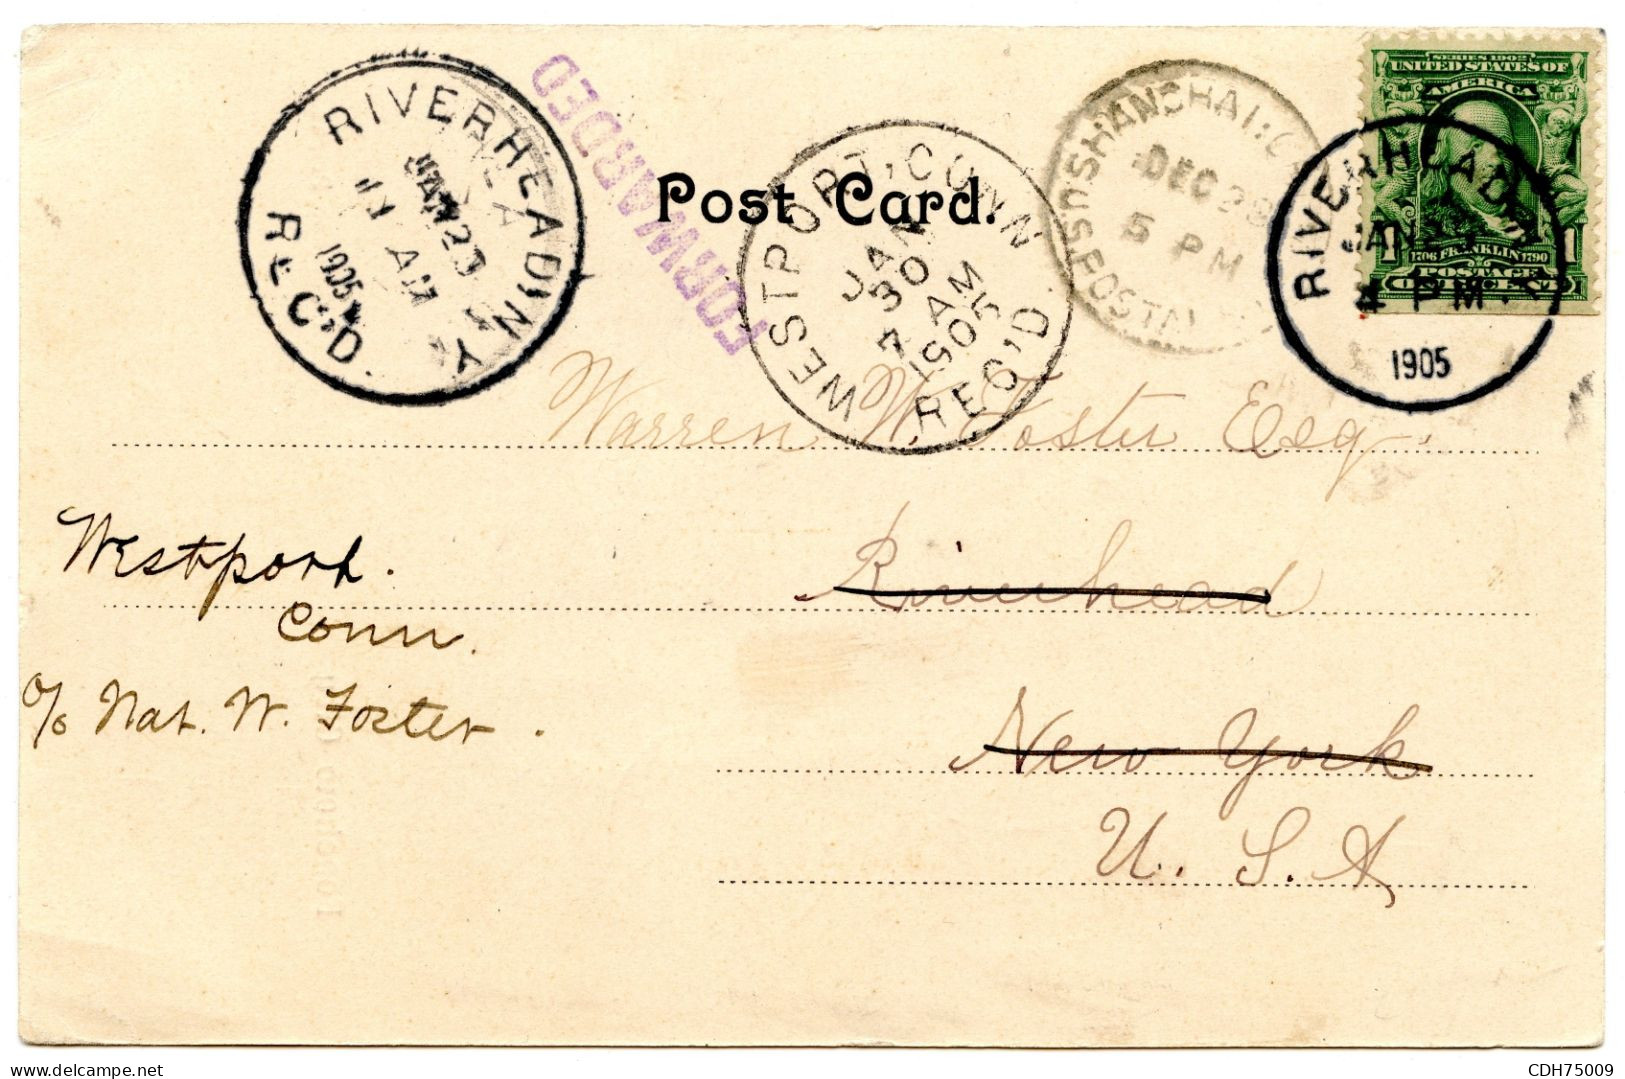 ETATS UNIS - CARTE POSTALE DE SHANGHAI POUR RIVERHEAD REEXPEDIEE A WESTPORT, 1905 - Briefe U. Dokumente